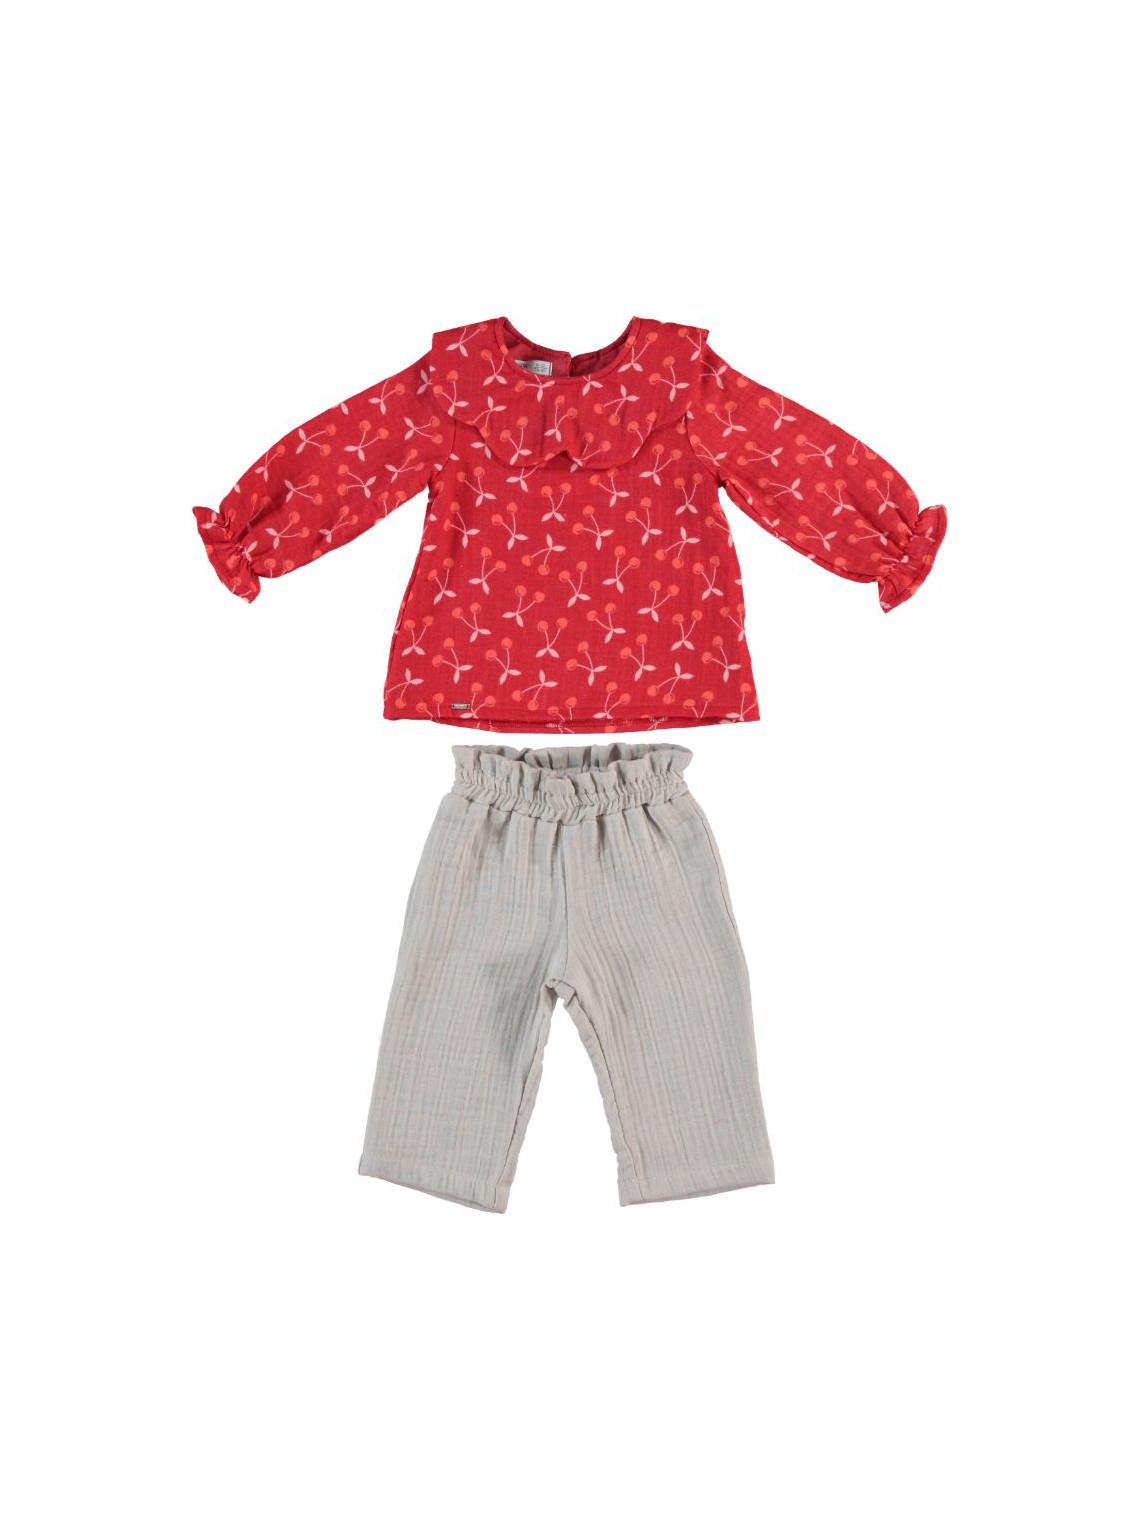 Exclusive Brand - Baby Girl Pant + Shirt Set / 9M | 12M | 18M | 24M - Kids Fashion Turkey